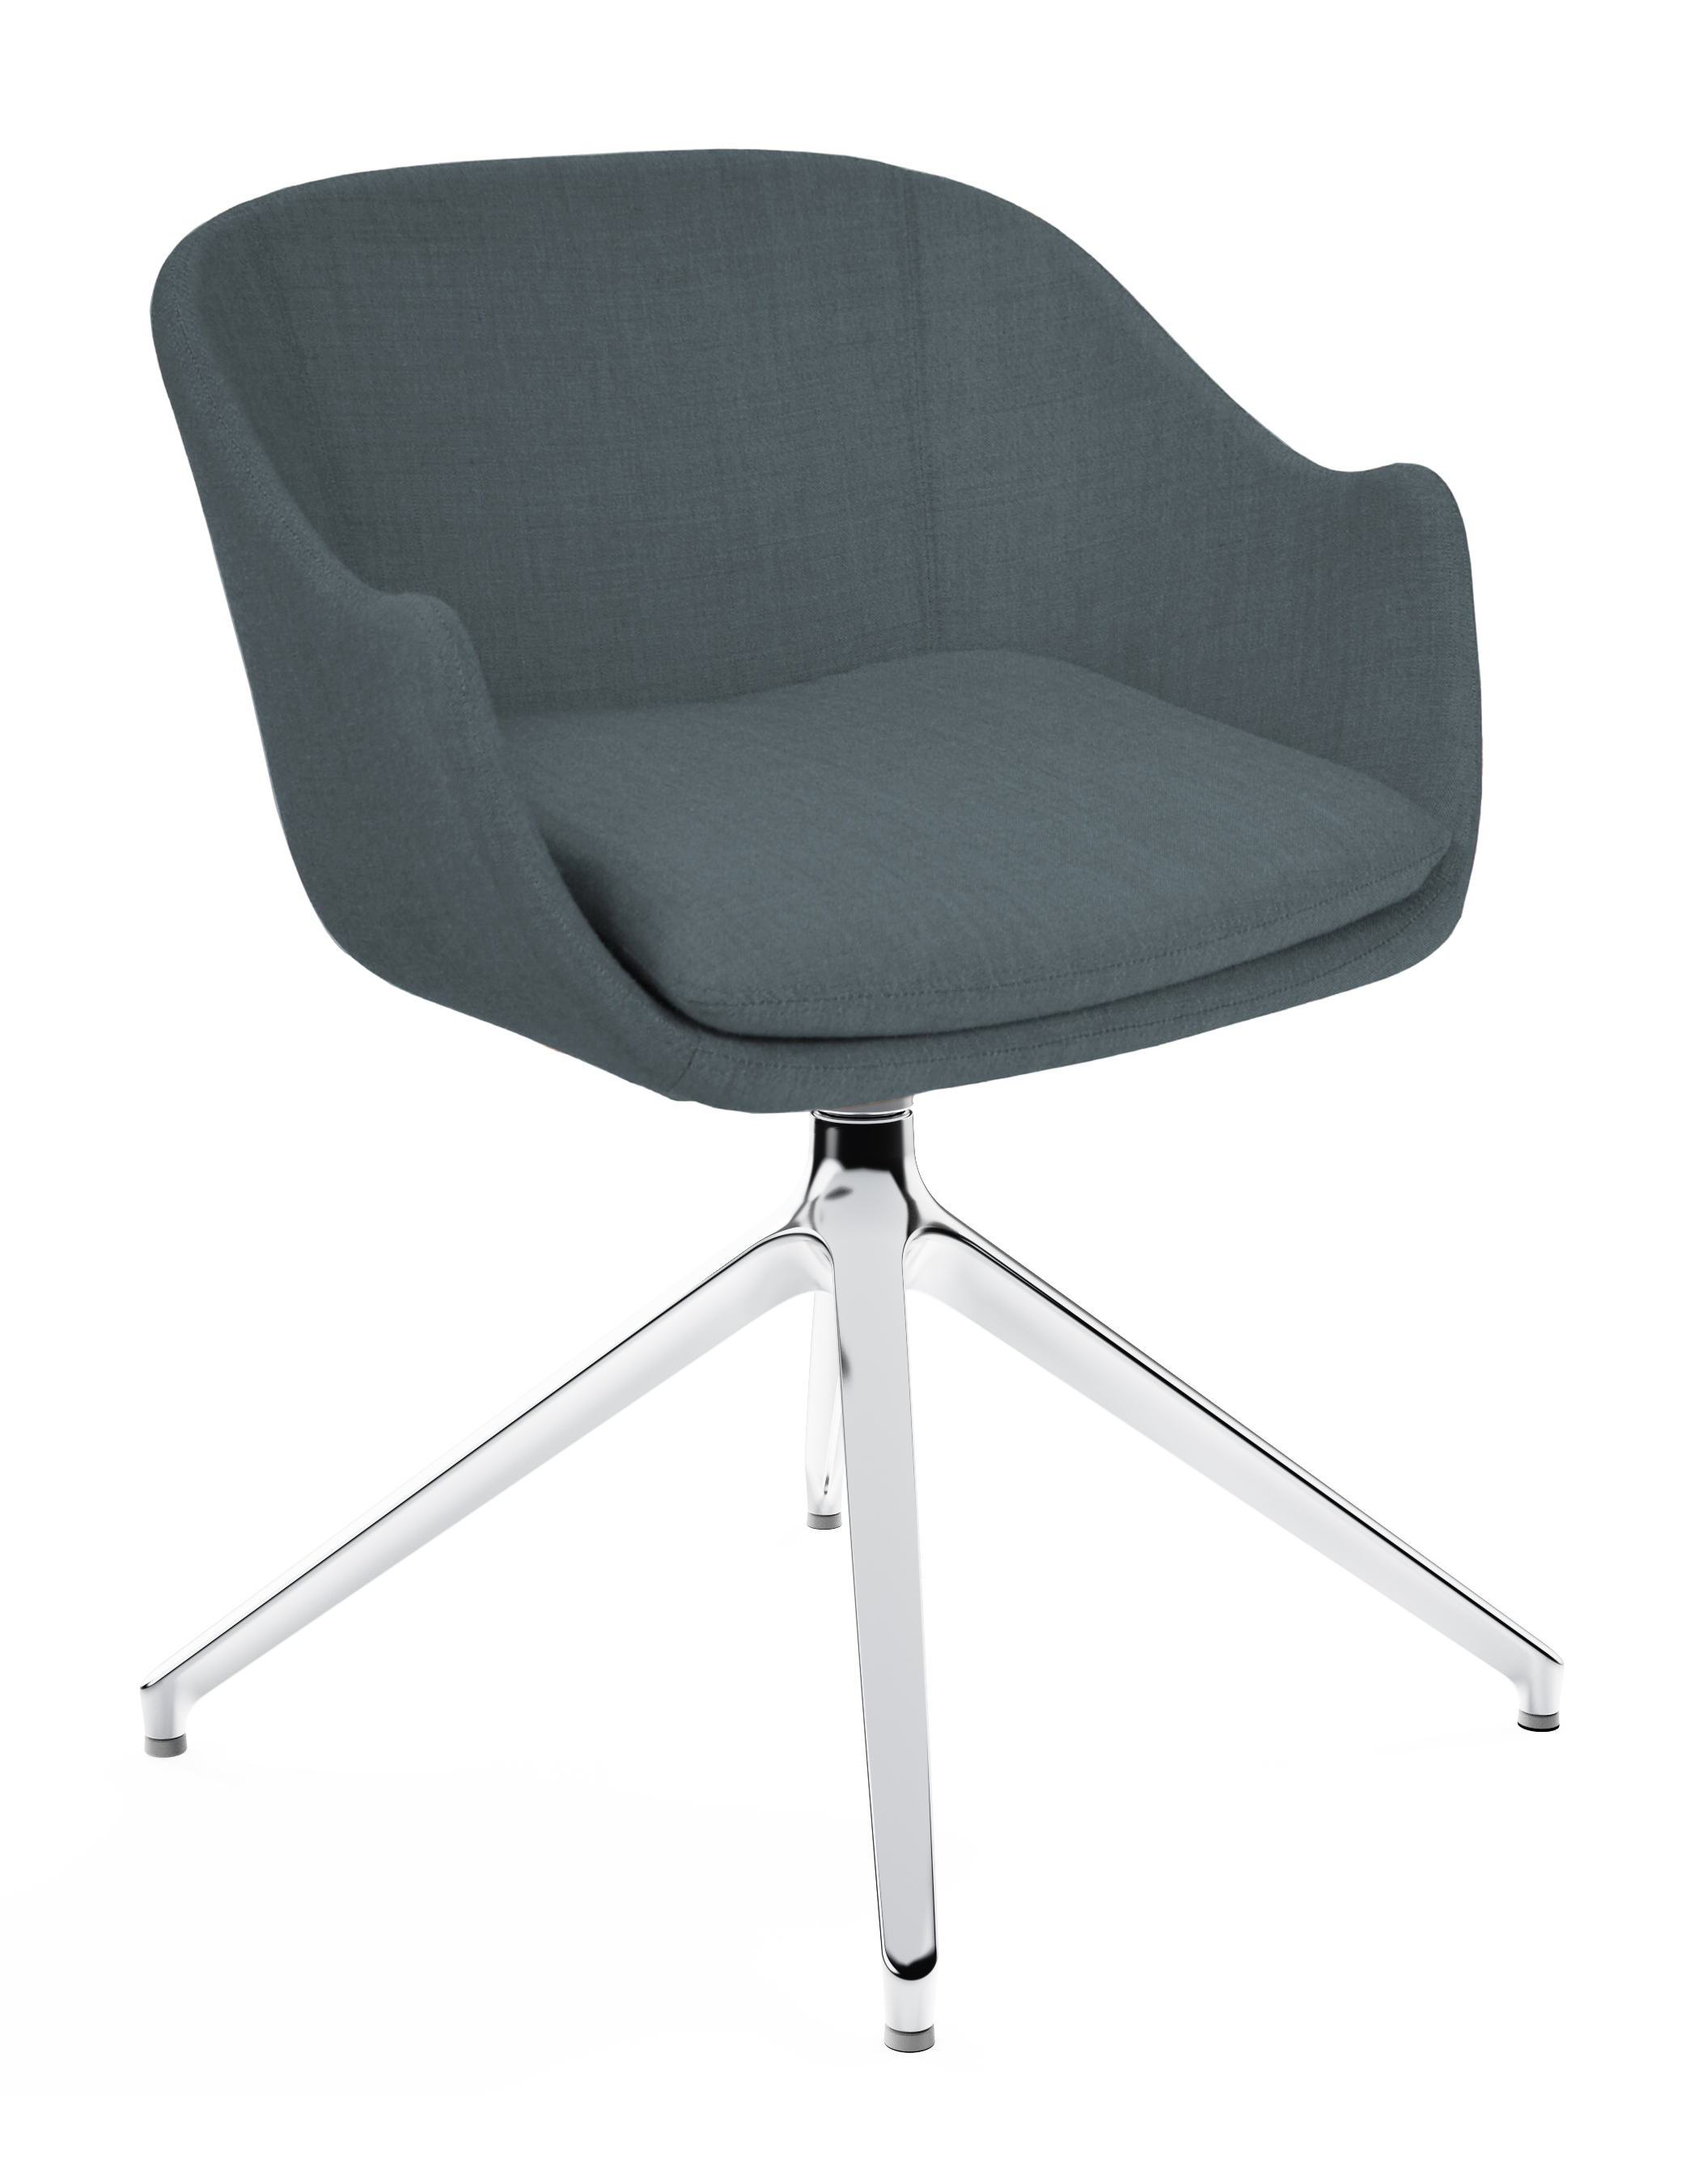 WS - Noir chair - 4 star pyramidal polished base (Front angle)